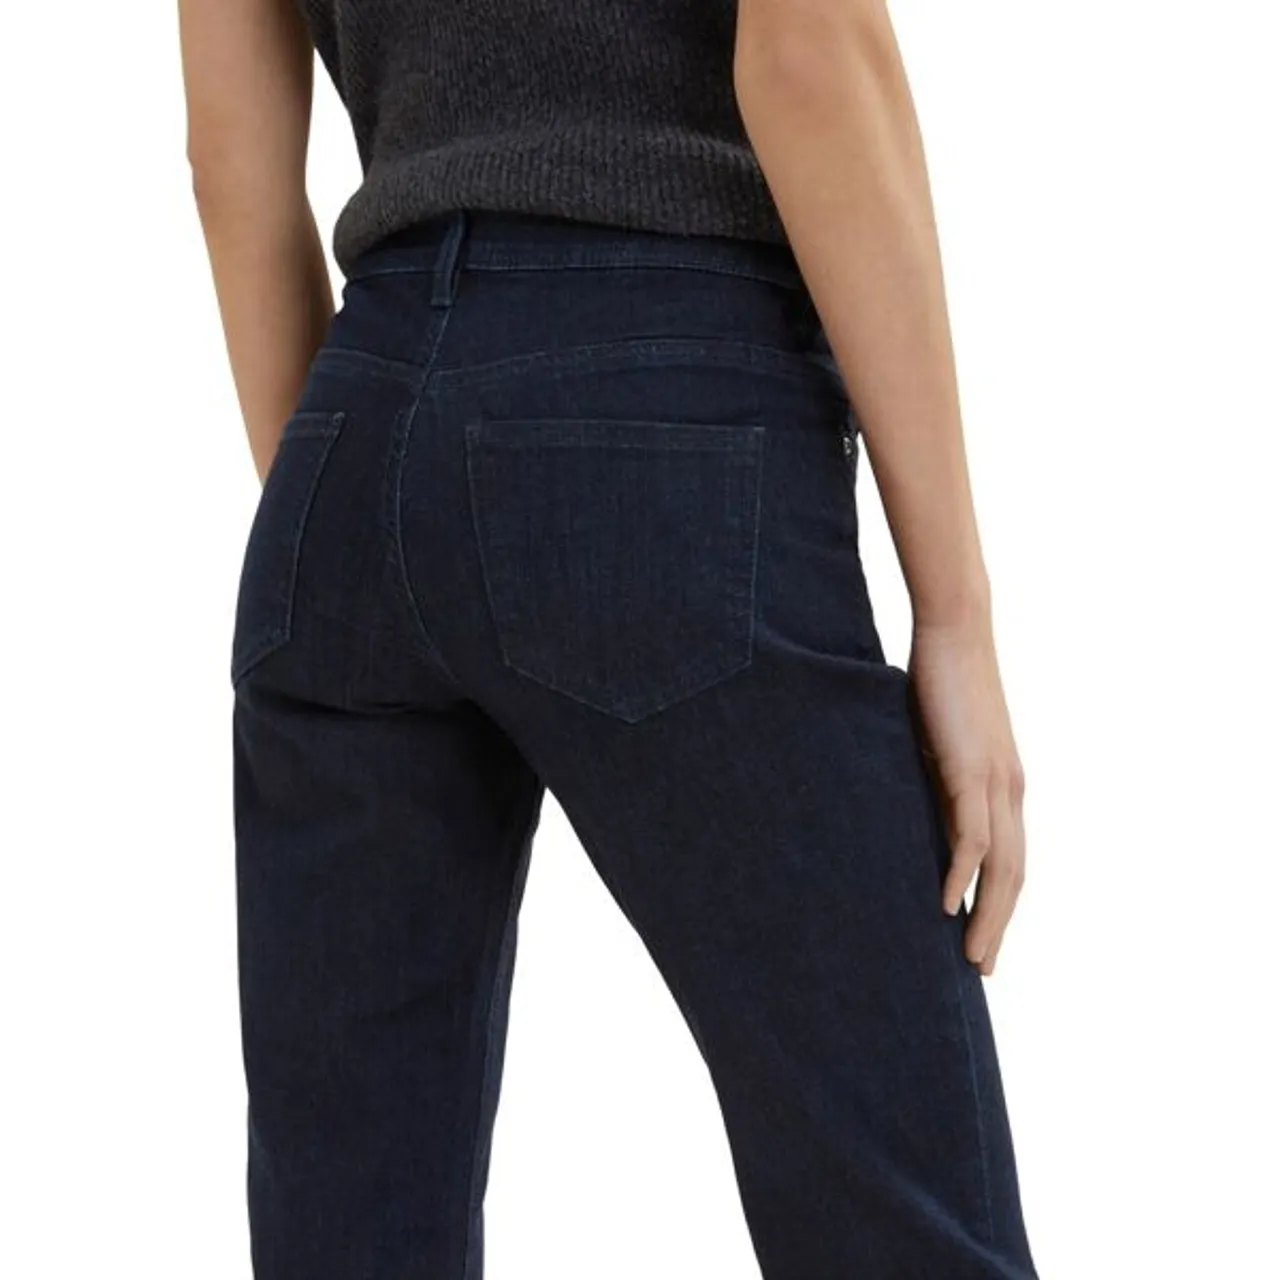 Straight-Jeans TOM TAILOR "Alexa Straight" Gr. 29, Länge 34, blau (clean rinsed blue denim) Damen Jeans Gerade Bestseller